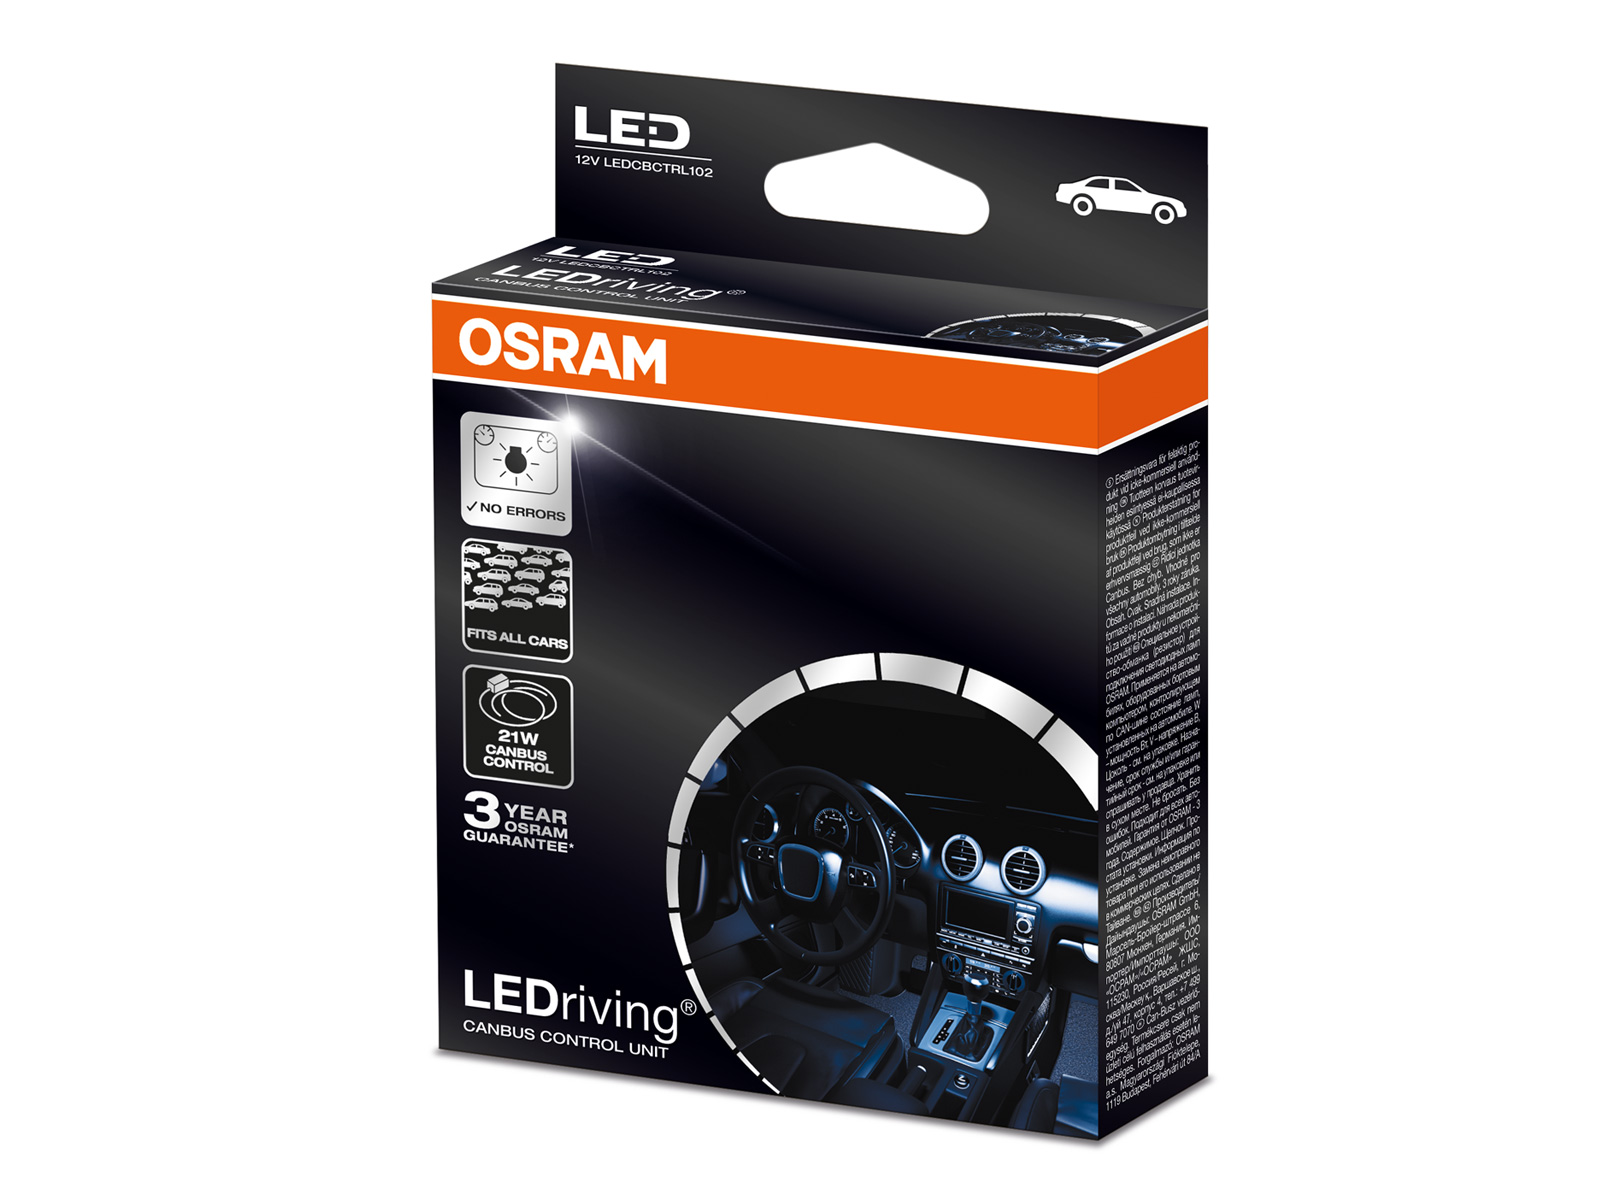 OSRAM LEDriving® 21W CAN-Bus Control Widerstände LEDCBCTRL102